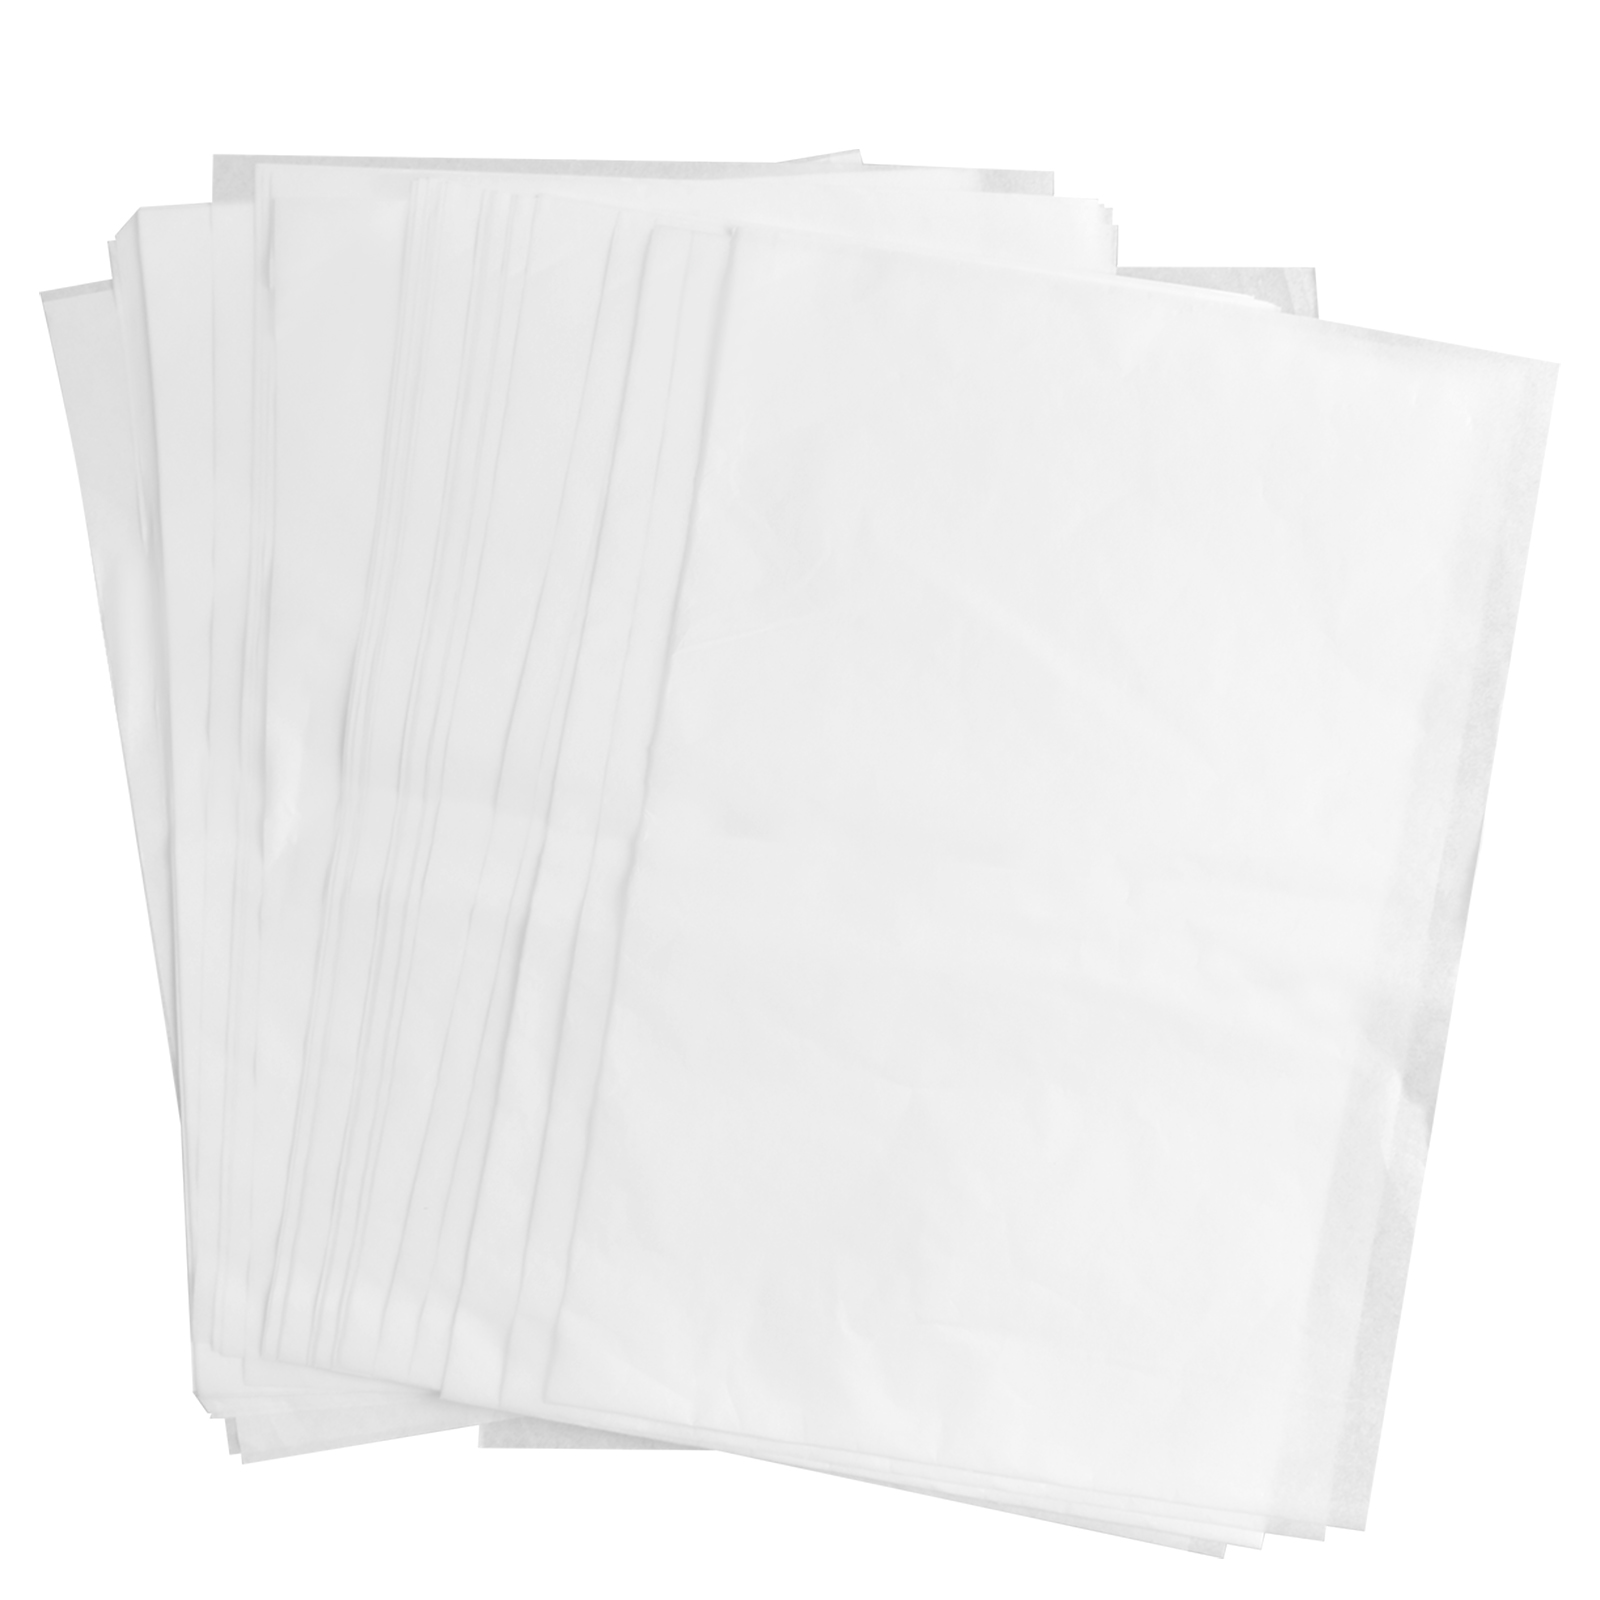 Translucent Vellum Paper (8.5 x 11 in, 100 Sheets)